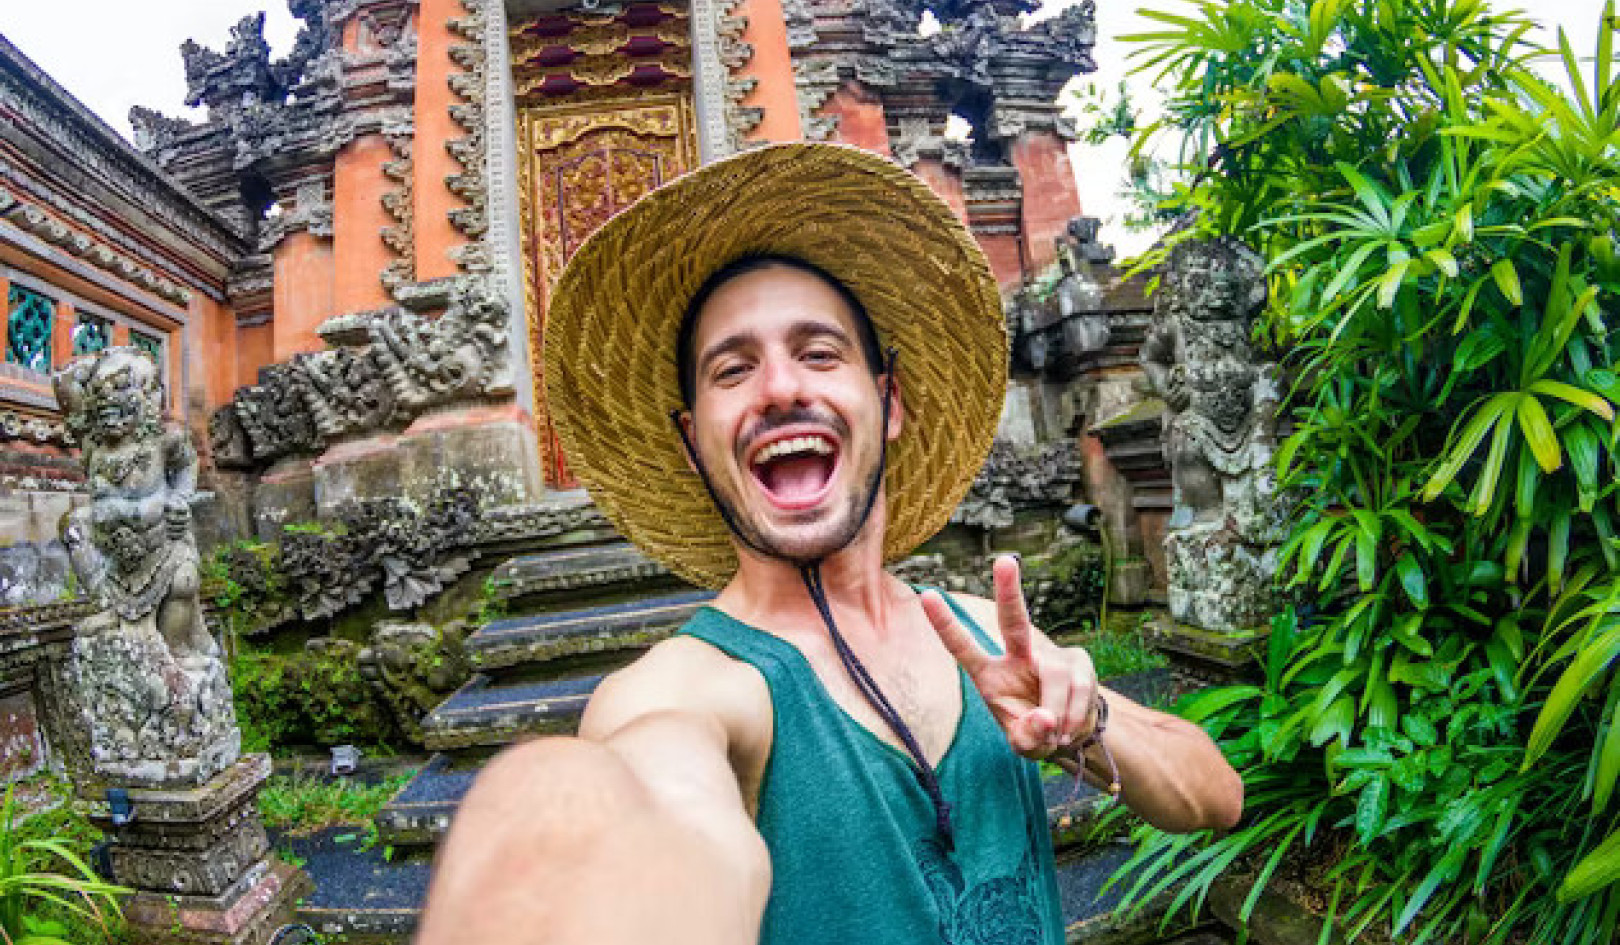 Instagram's Impact on Tourist Behavior: How to Travel Respectfully